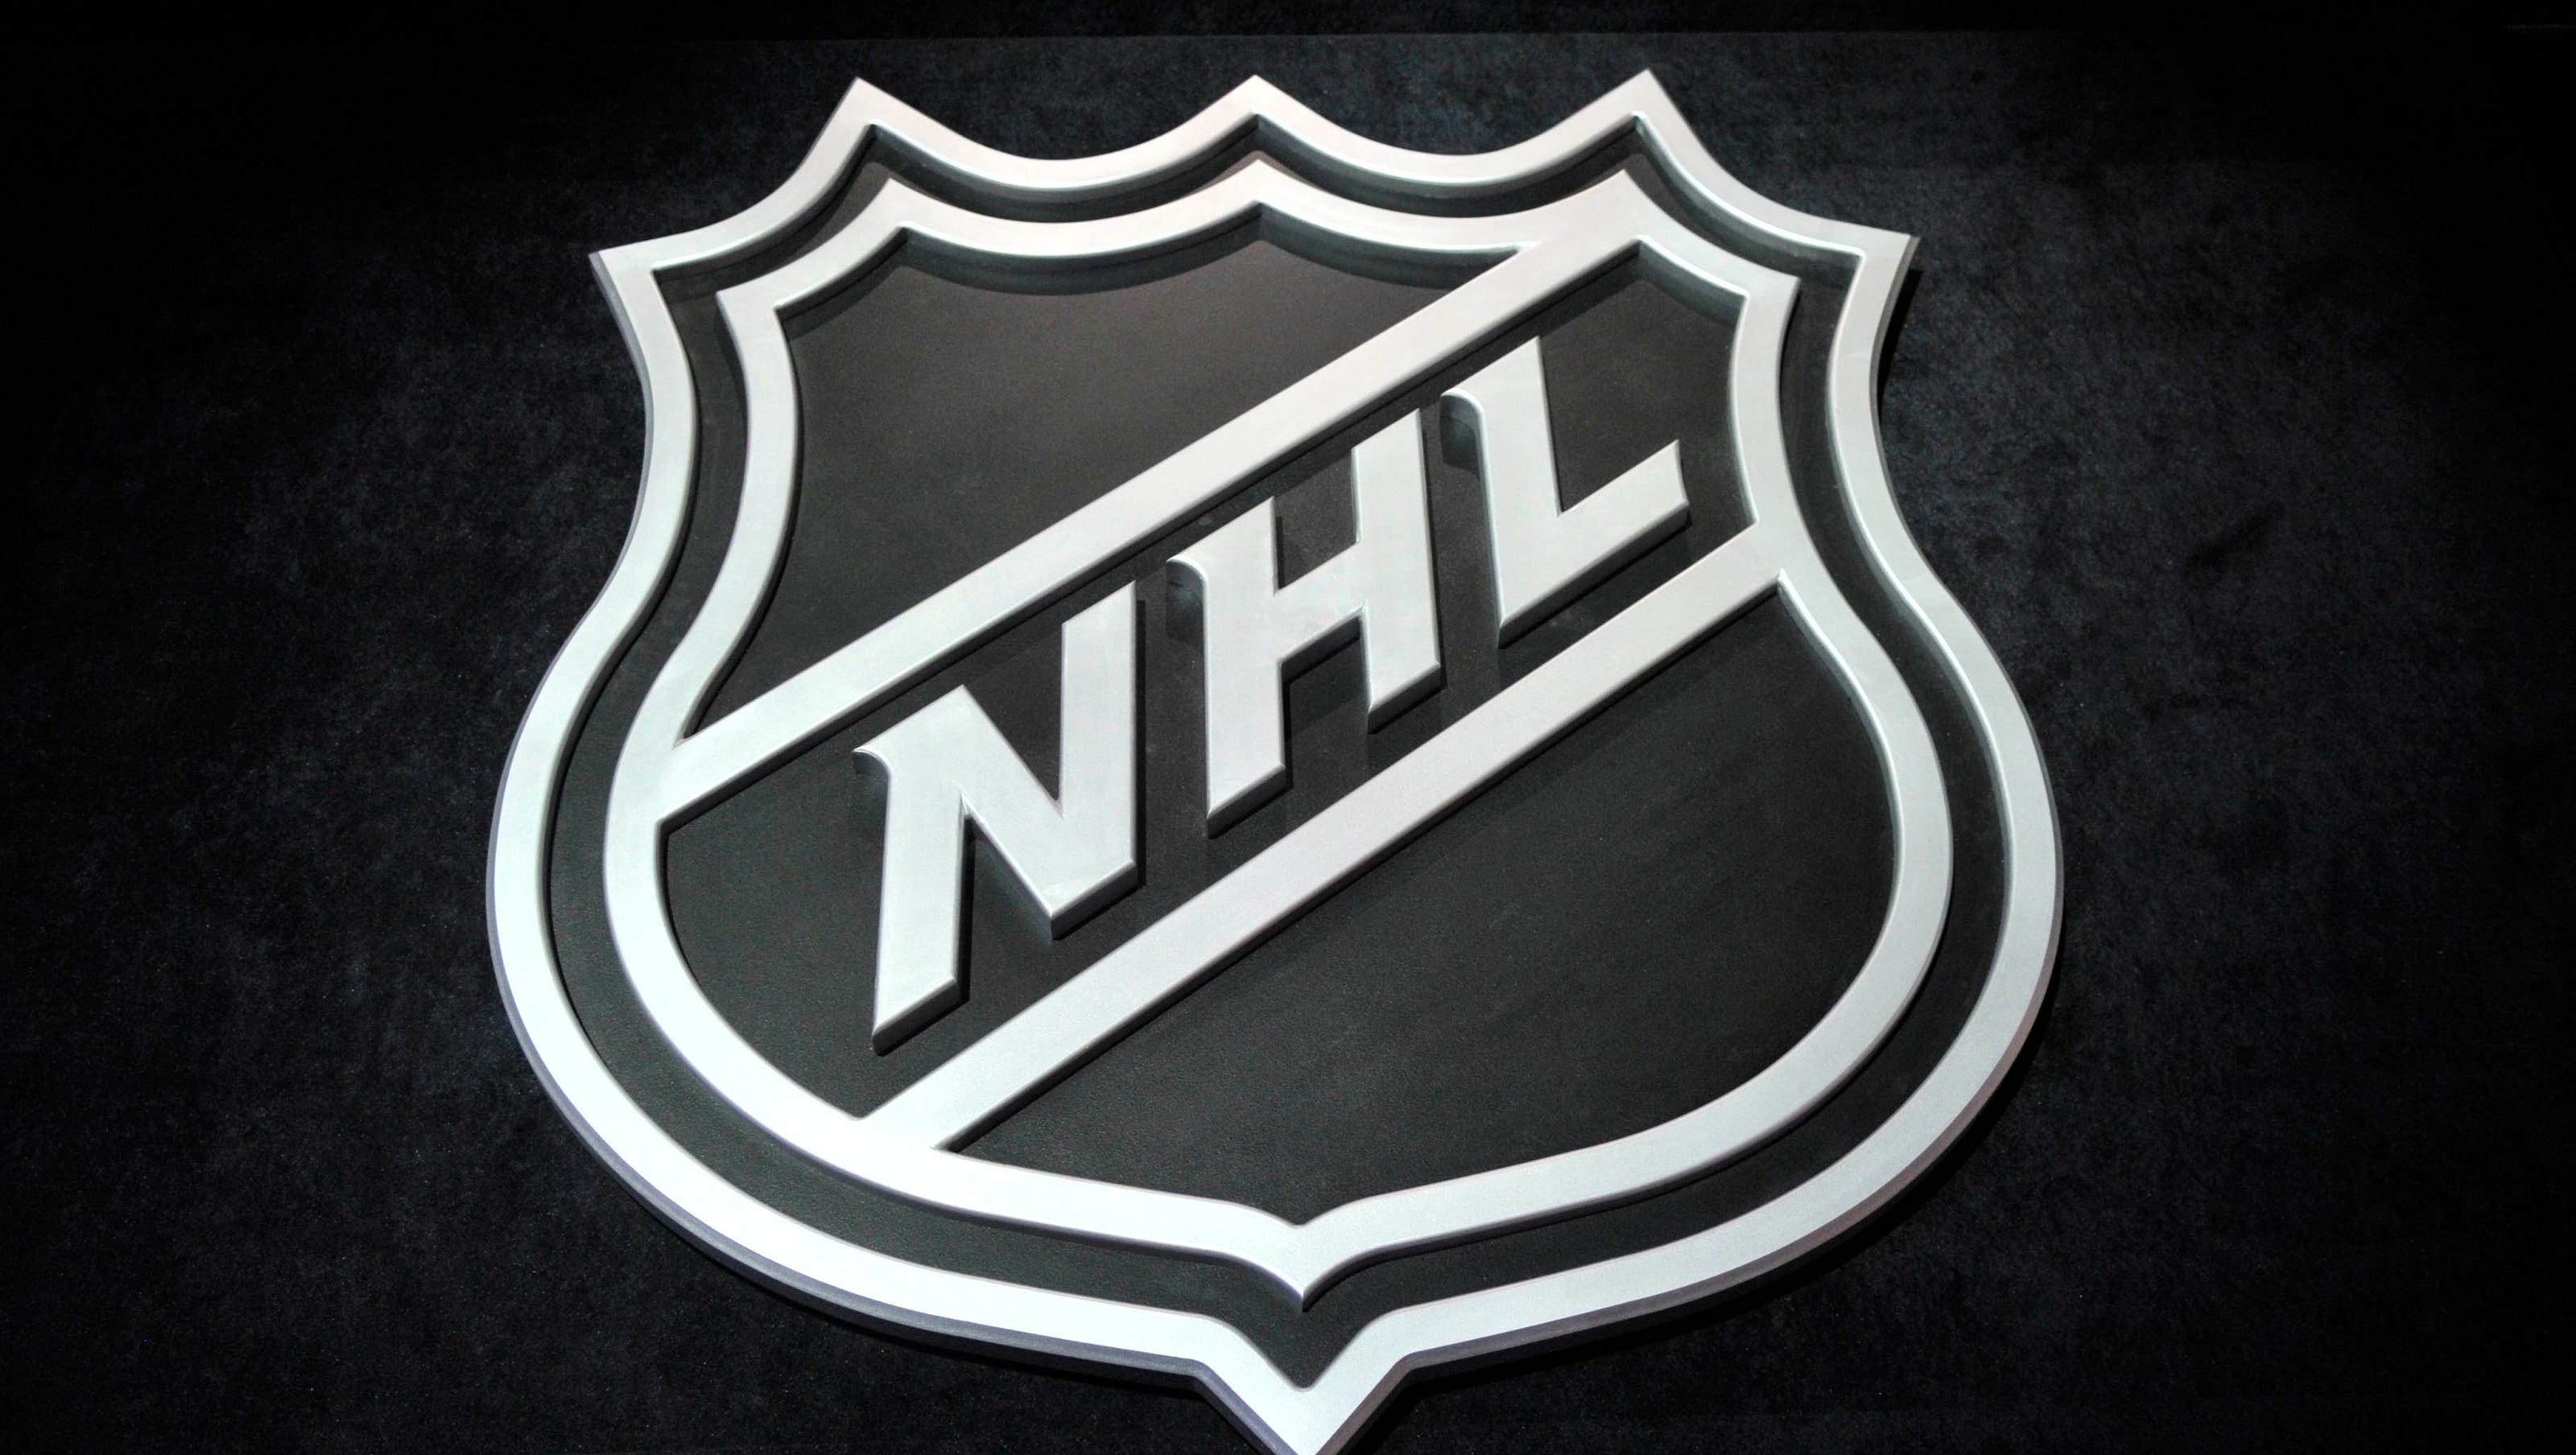 NHL salary cap set at 75 million for 201718 season